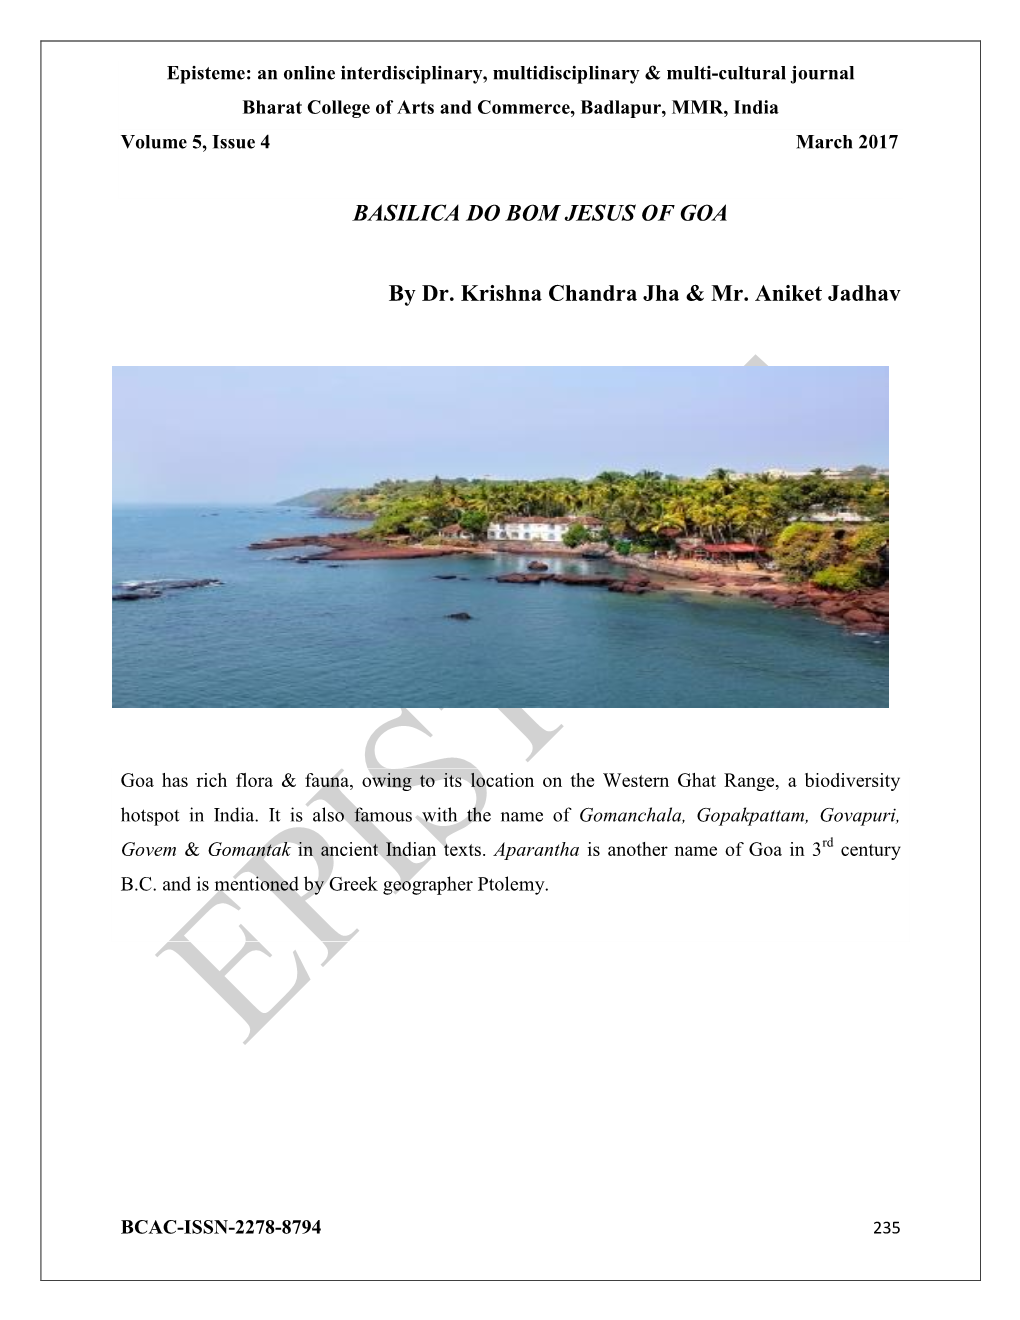 BASILICA DO BOM JESUS of GOA by Dr. Krishna Chandra Jha & Mr